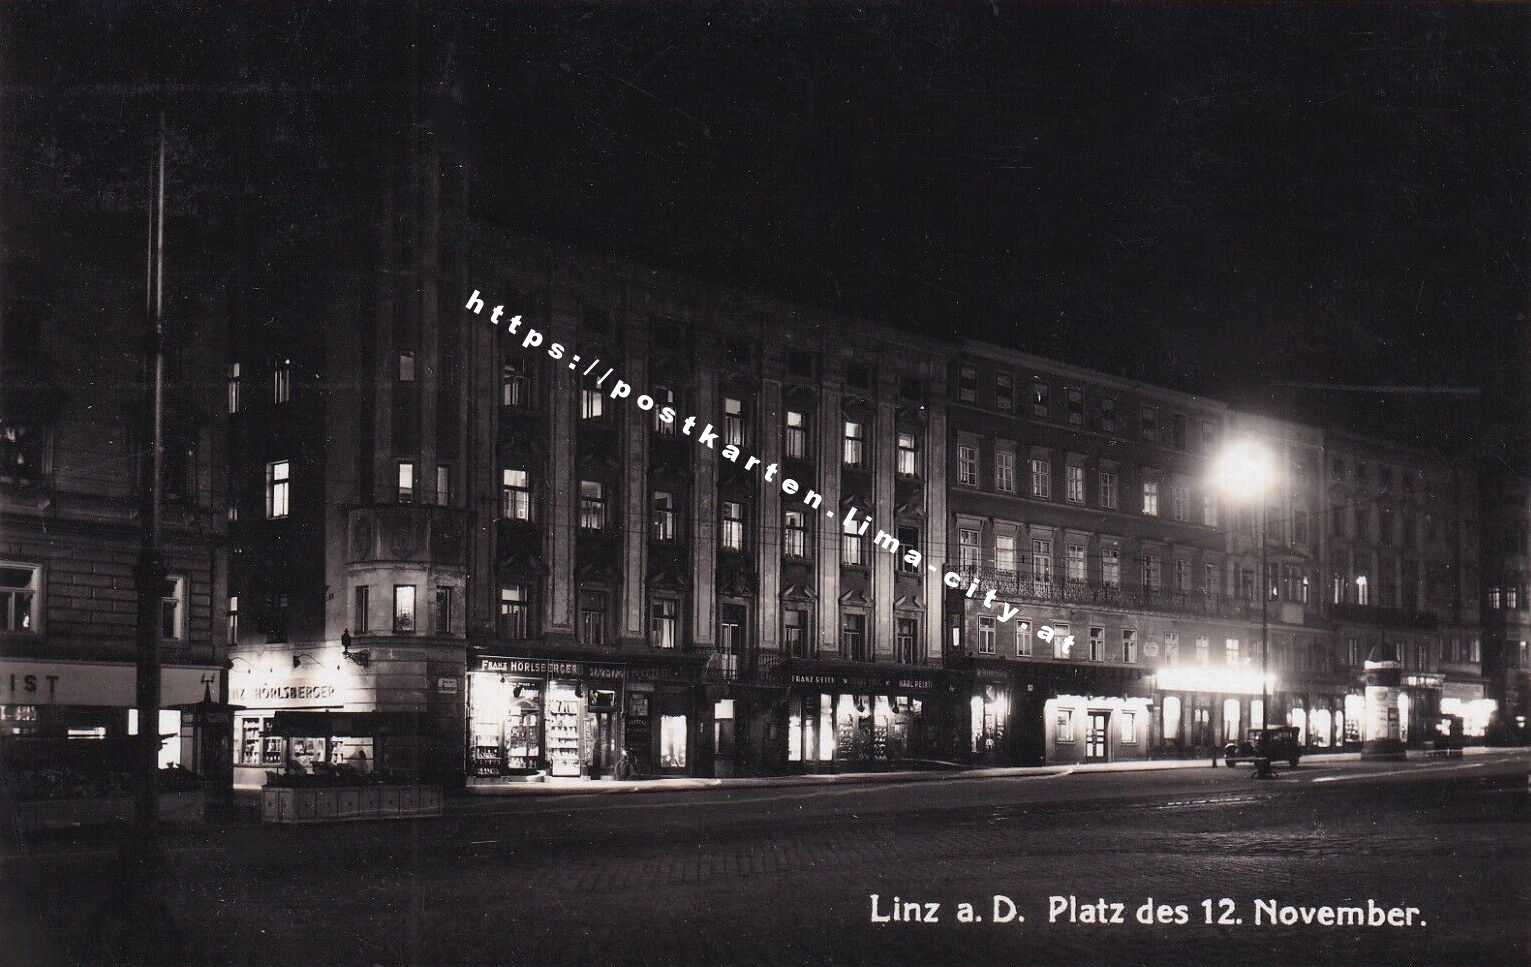 Linz Platz des 12. November 1934